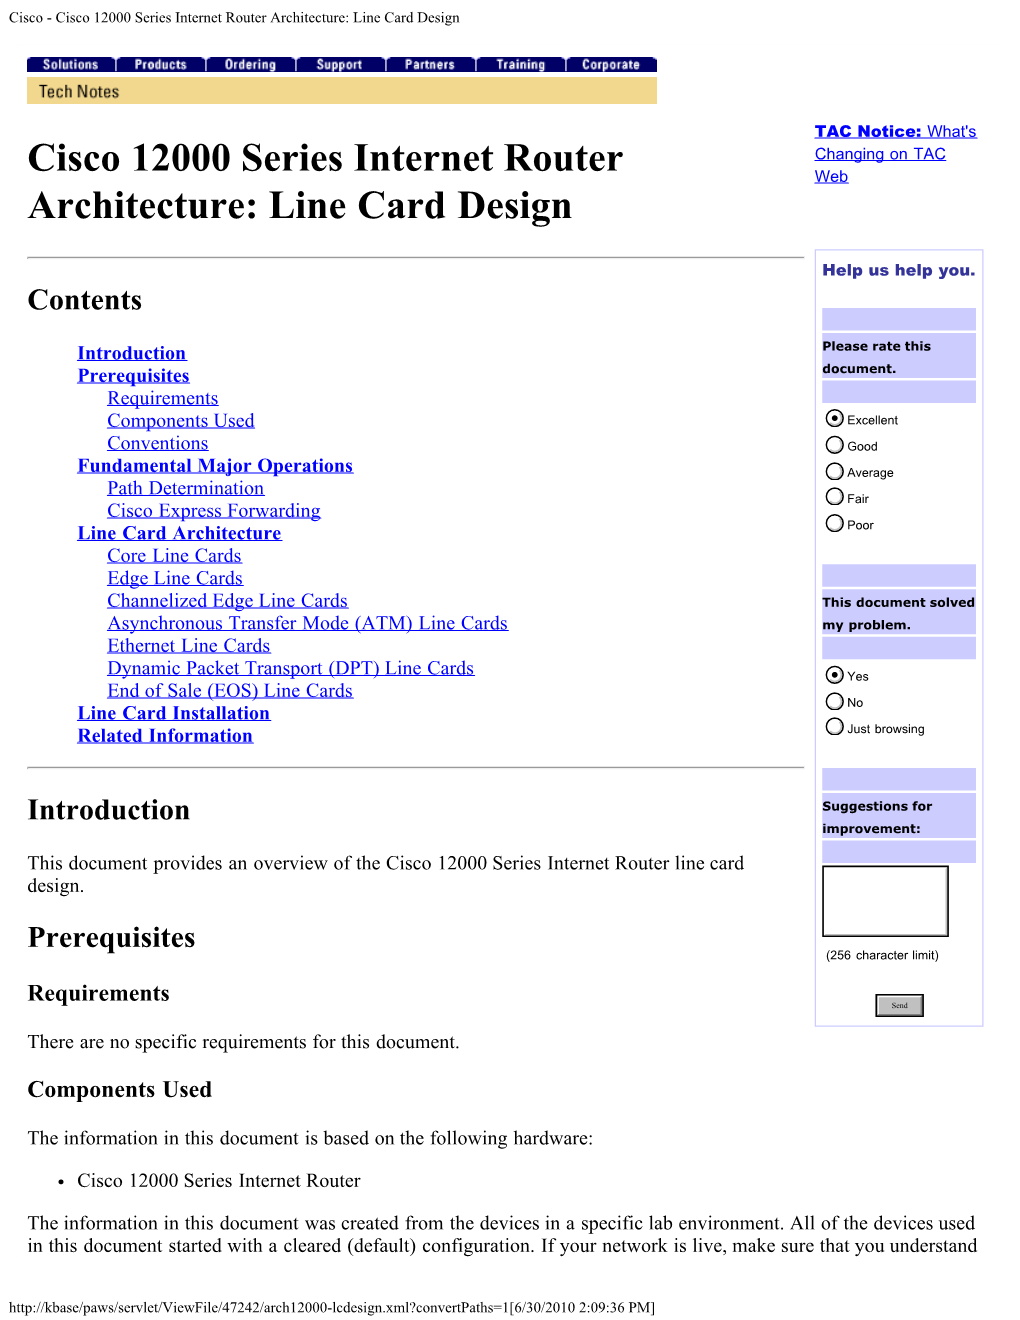 Cisco 12000 Series Internet Router Architecture: Line Card Design